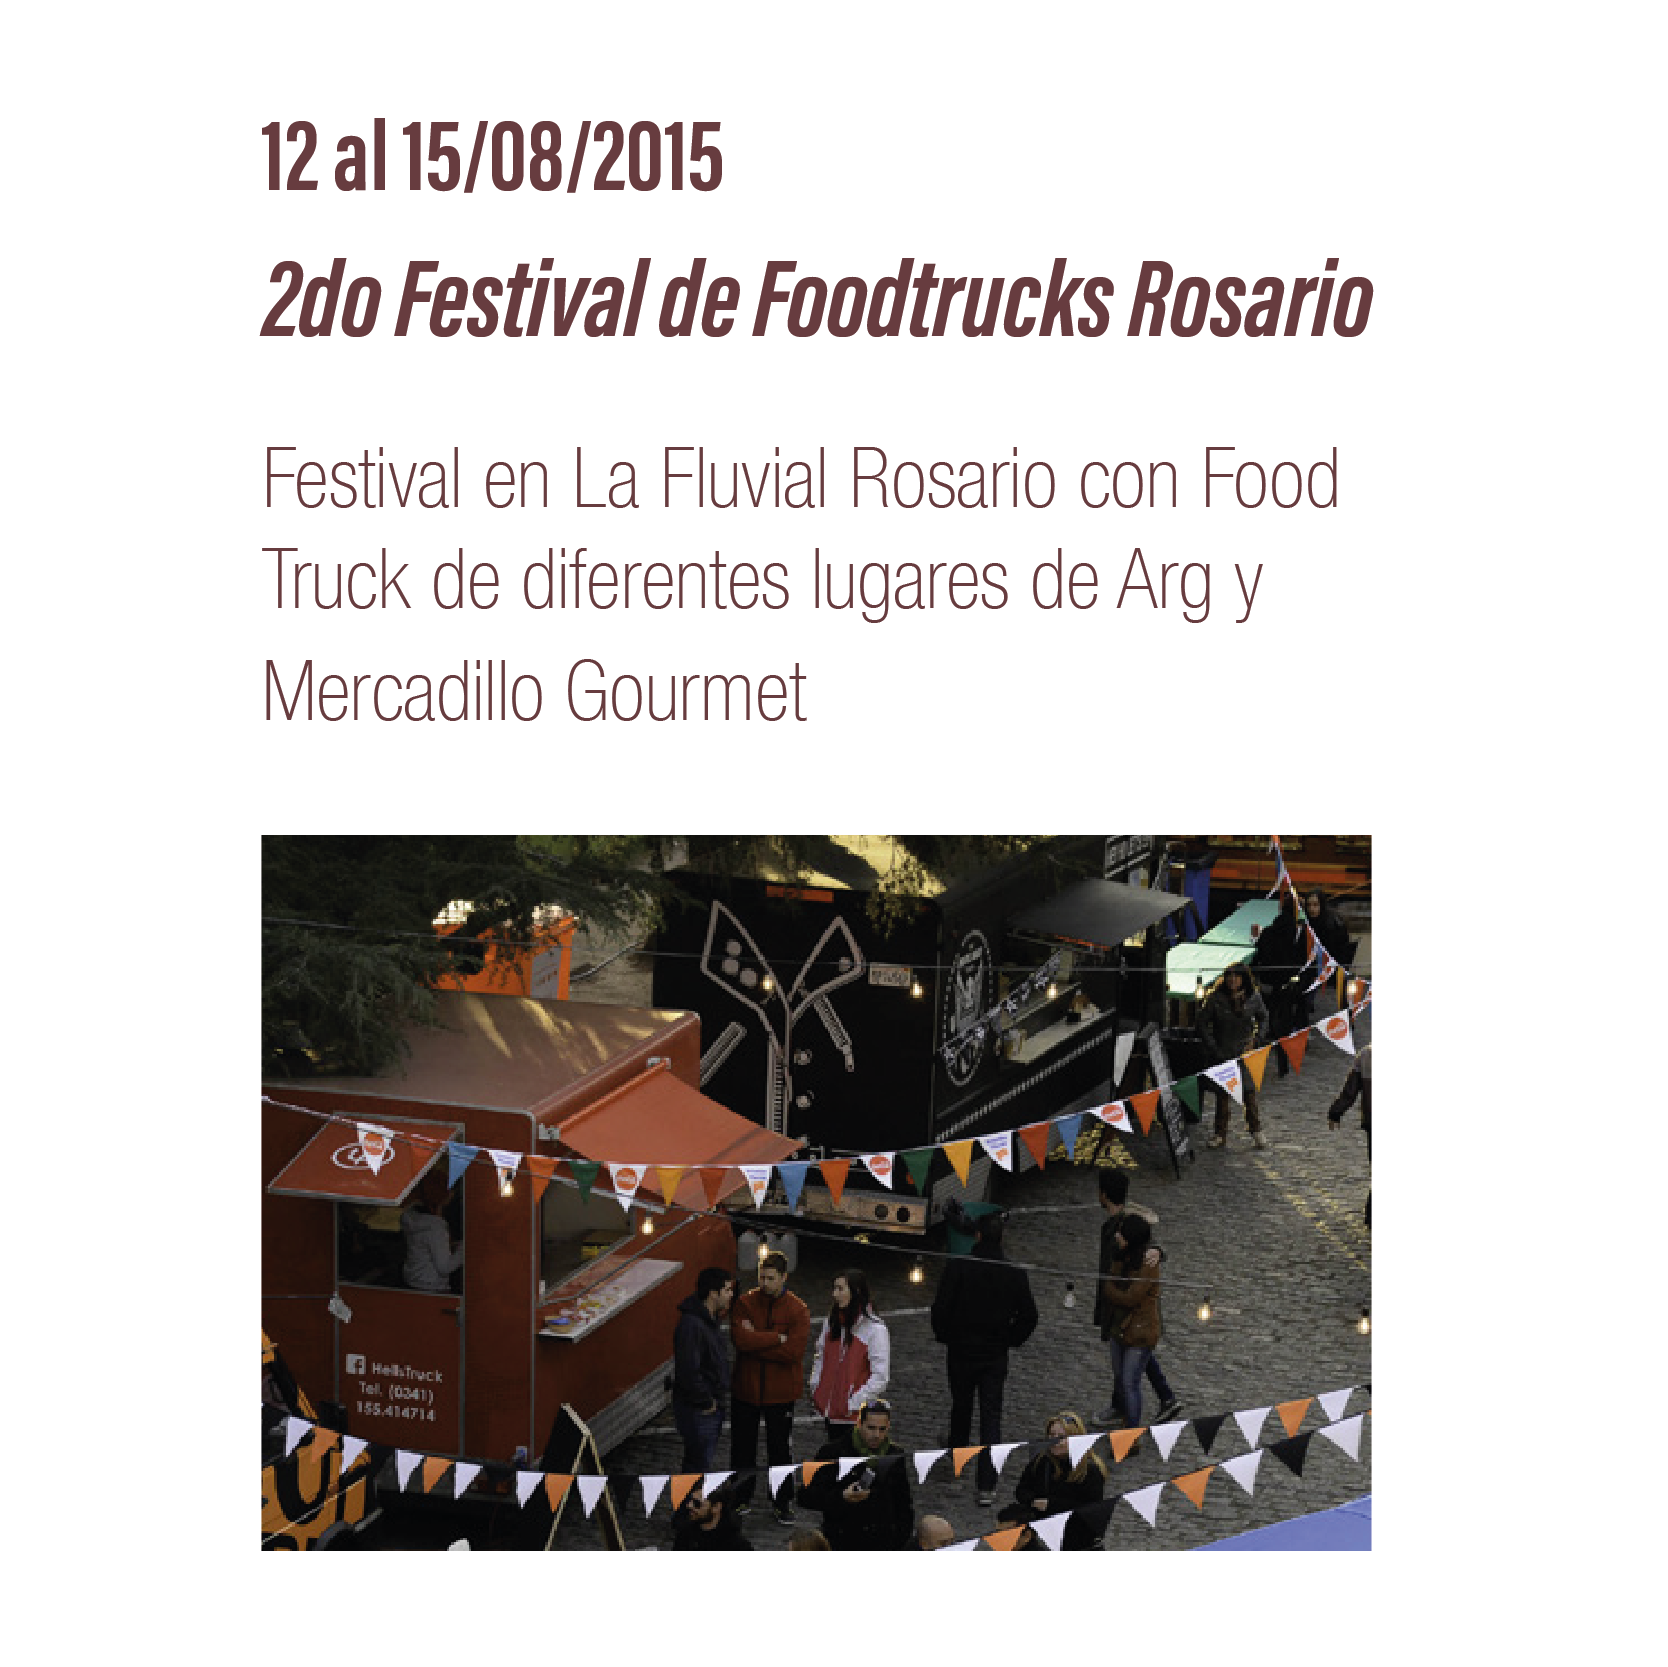 2do Festival Foodtrucks Rosario